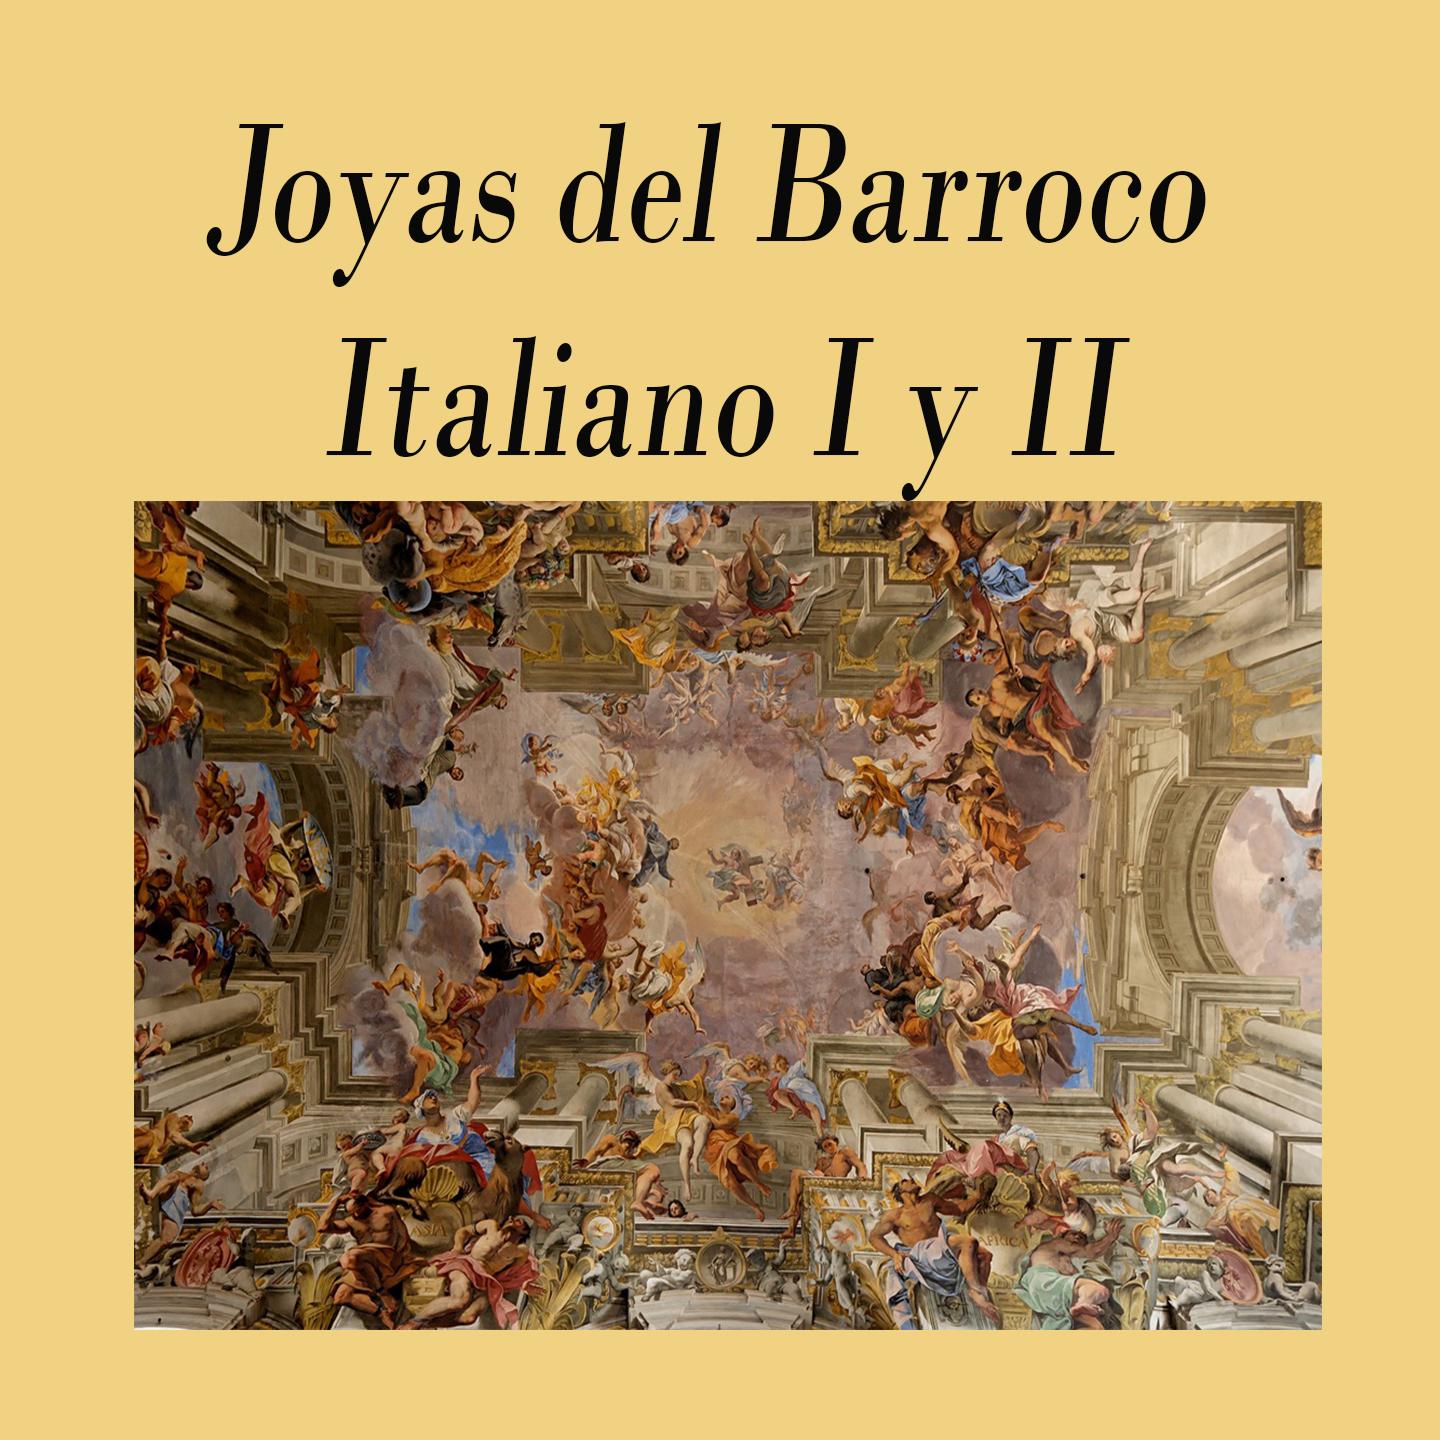 Joyas del Barroco Italiano I y II